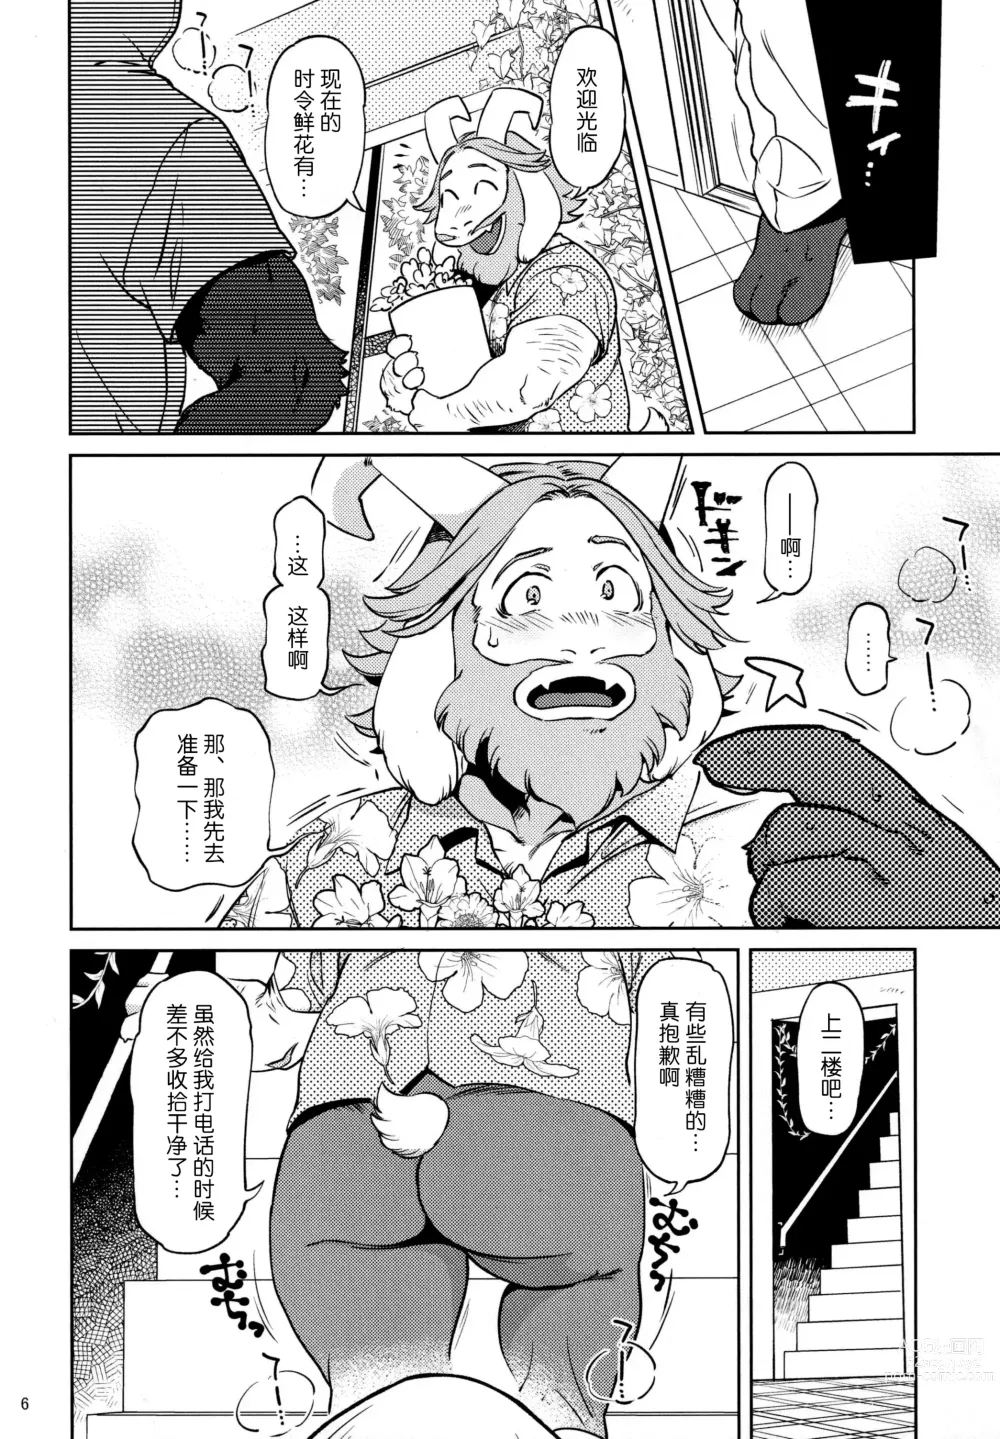 Page 5 of doujinshi 温柔的花店老板